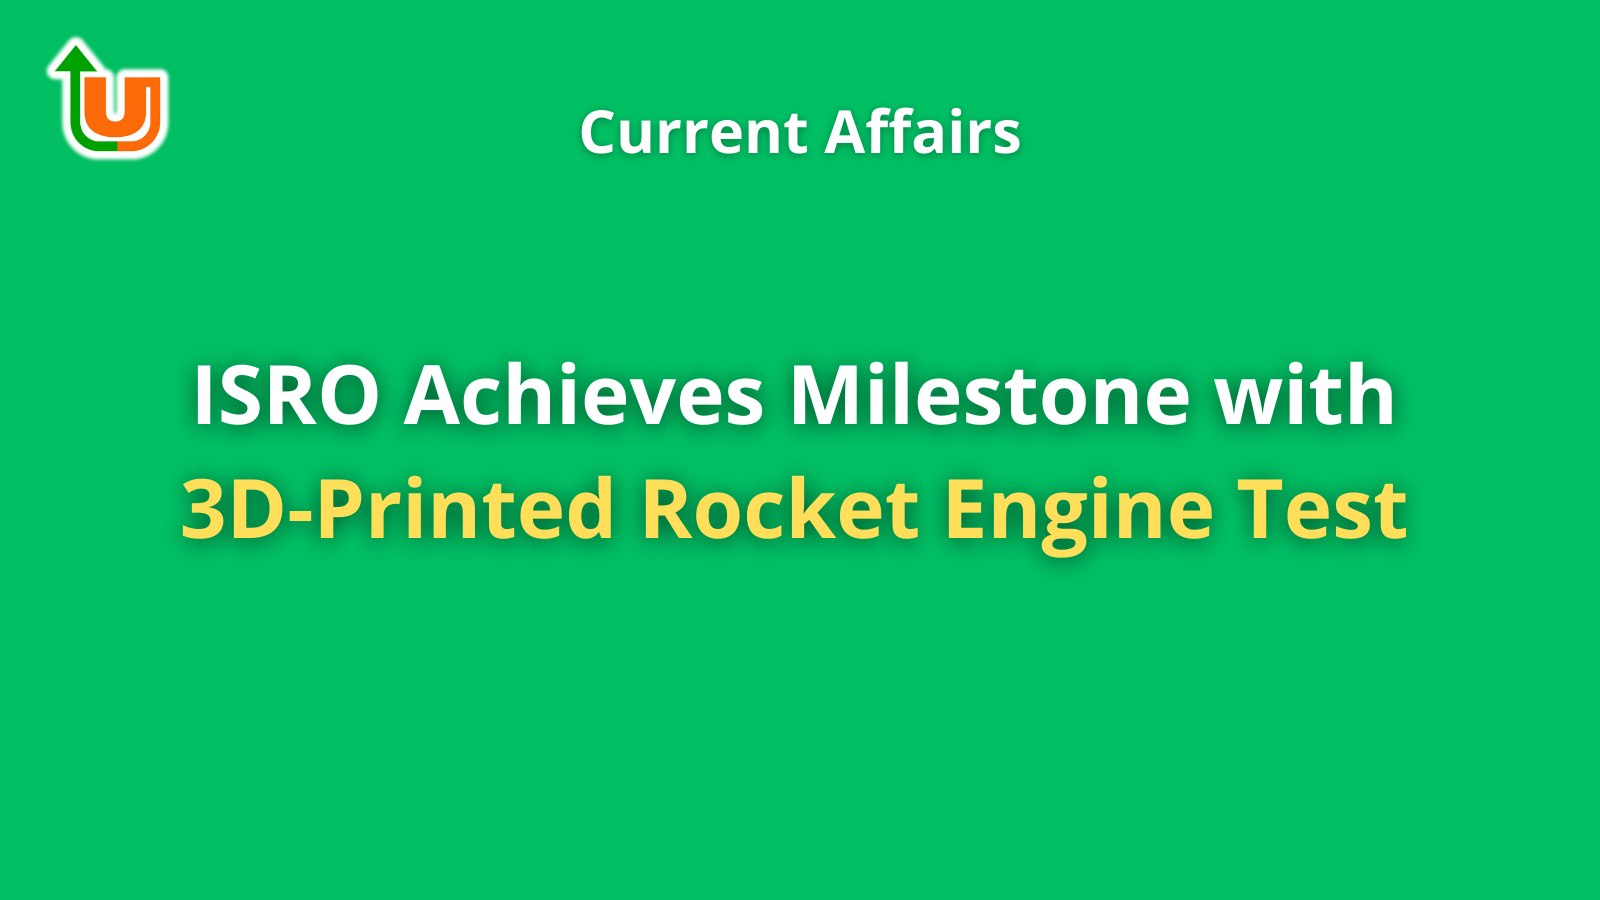 ISRO Achieves Milestone with 3D-Printed Rocket Engine Test